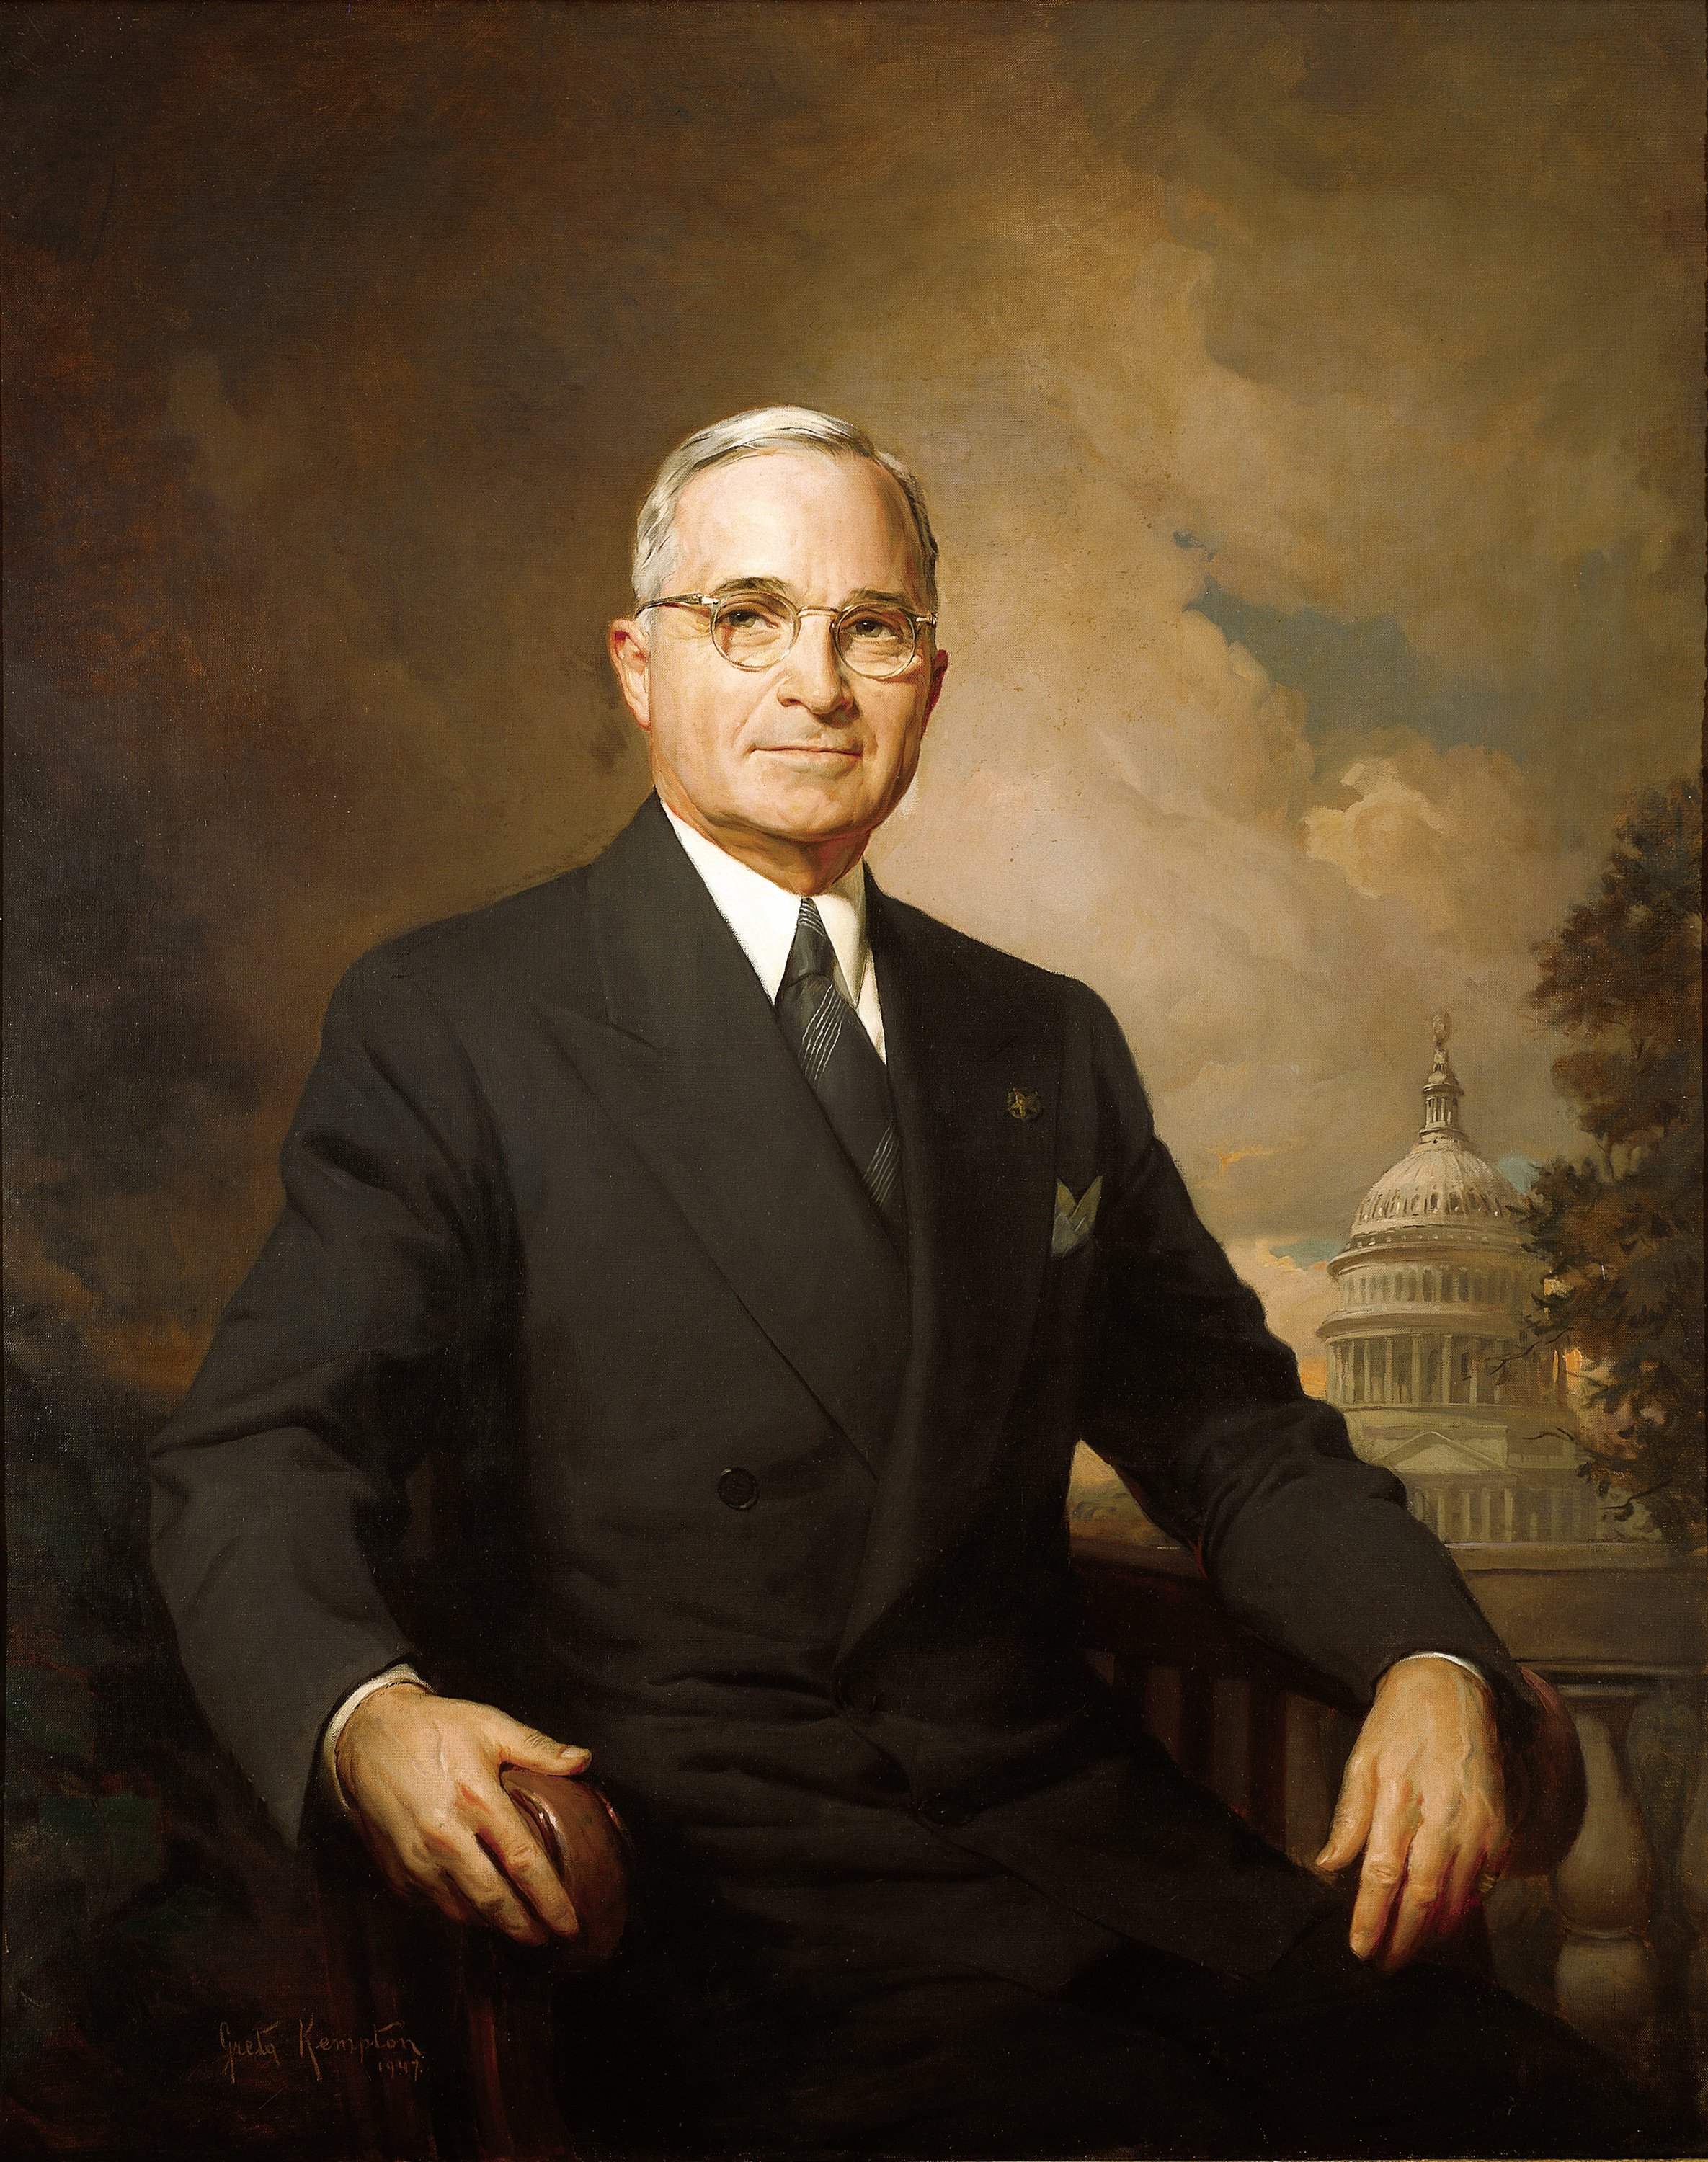 Official White House portrait of President Harry S. Truman, courtesy Harry S. Truman Presidential Library